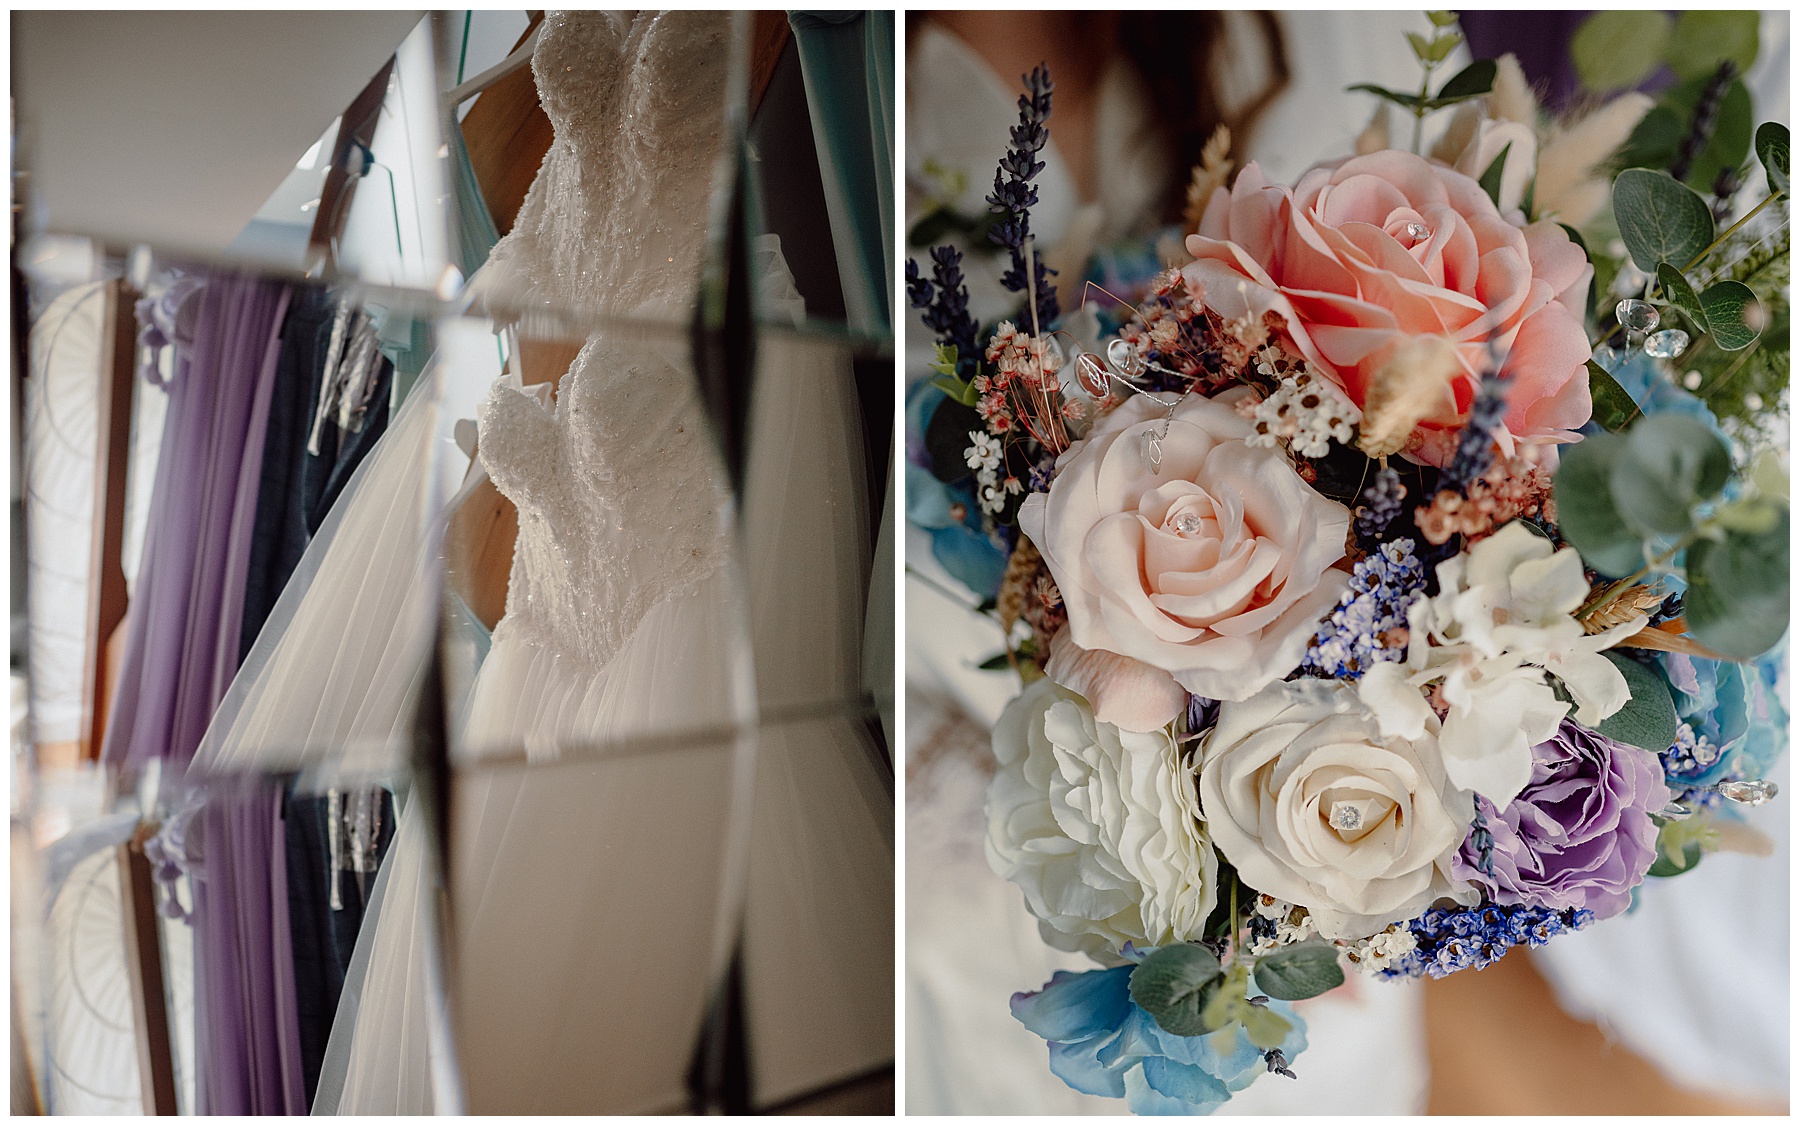 Wedding Flowers & Dress in Mirror